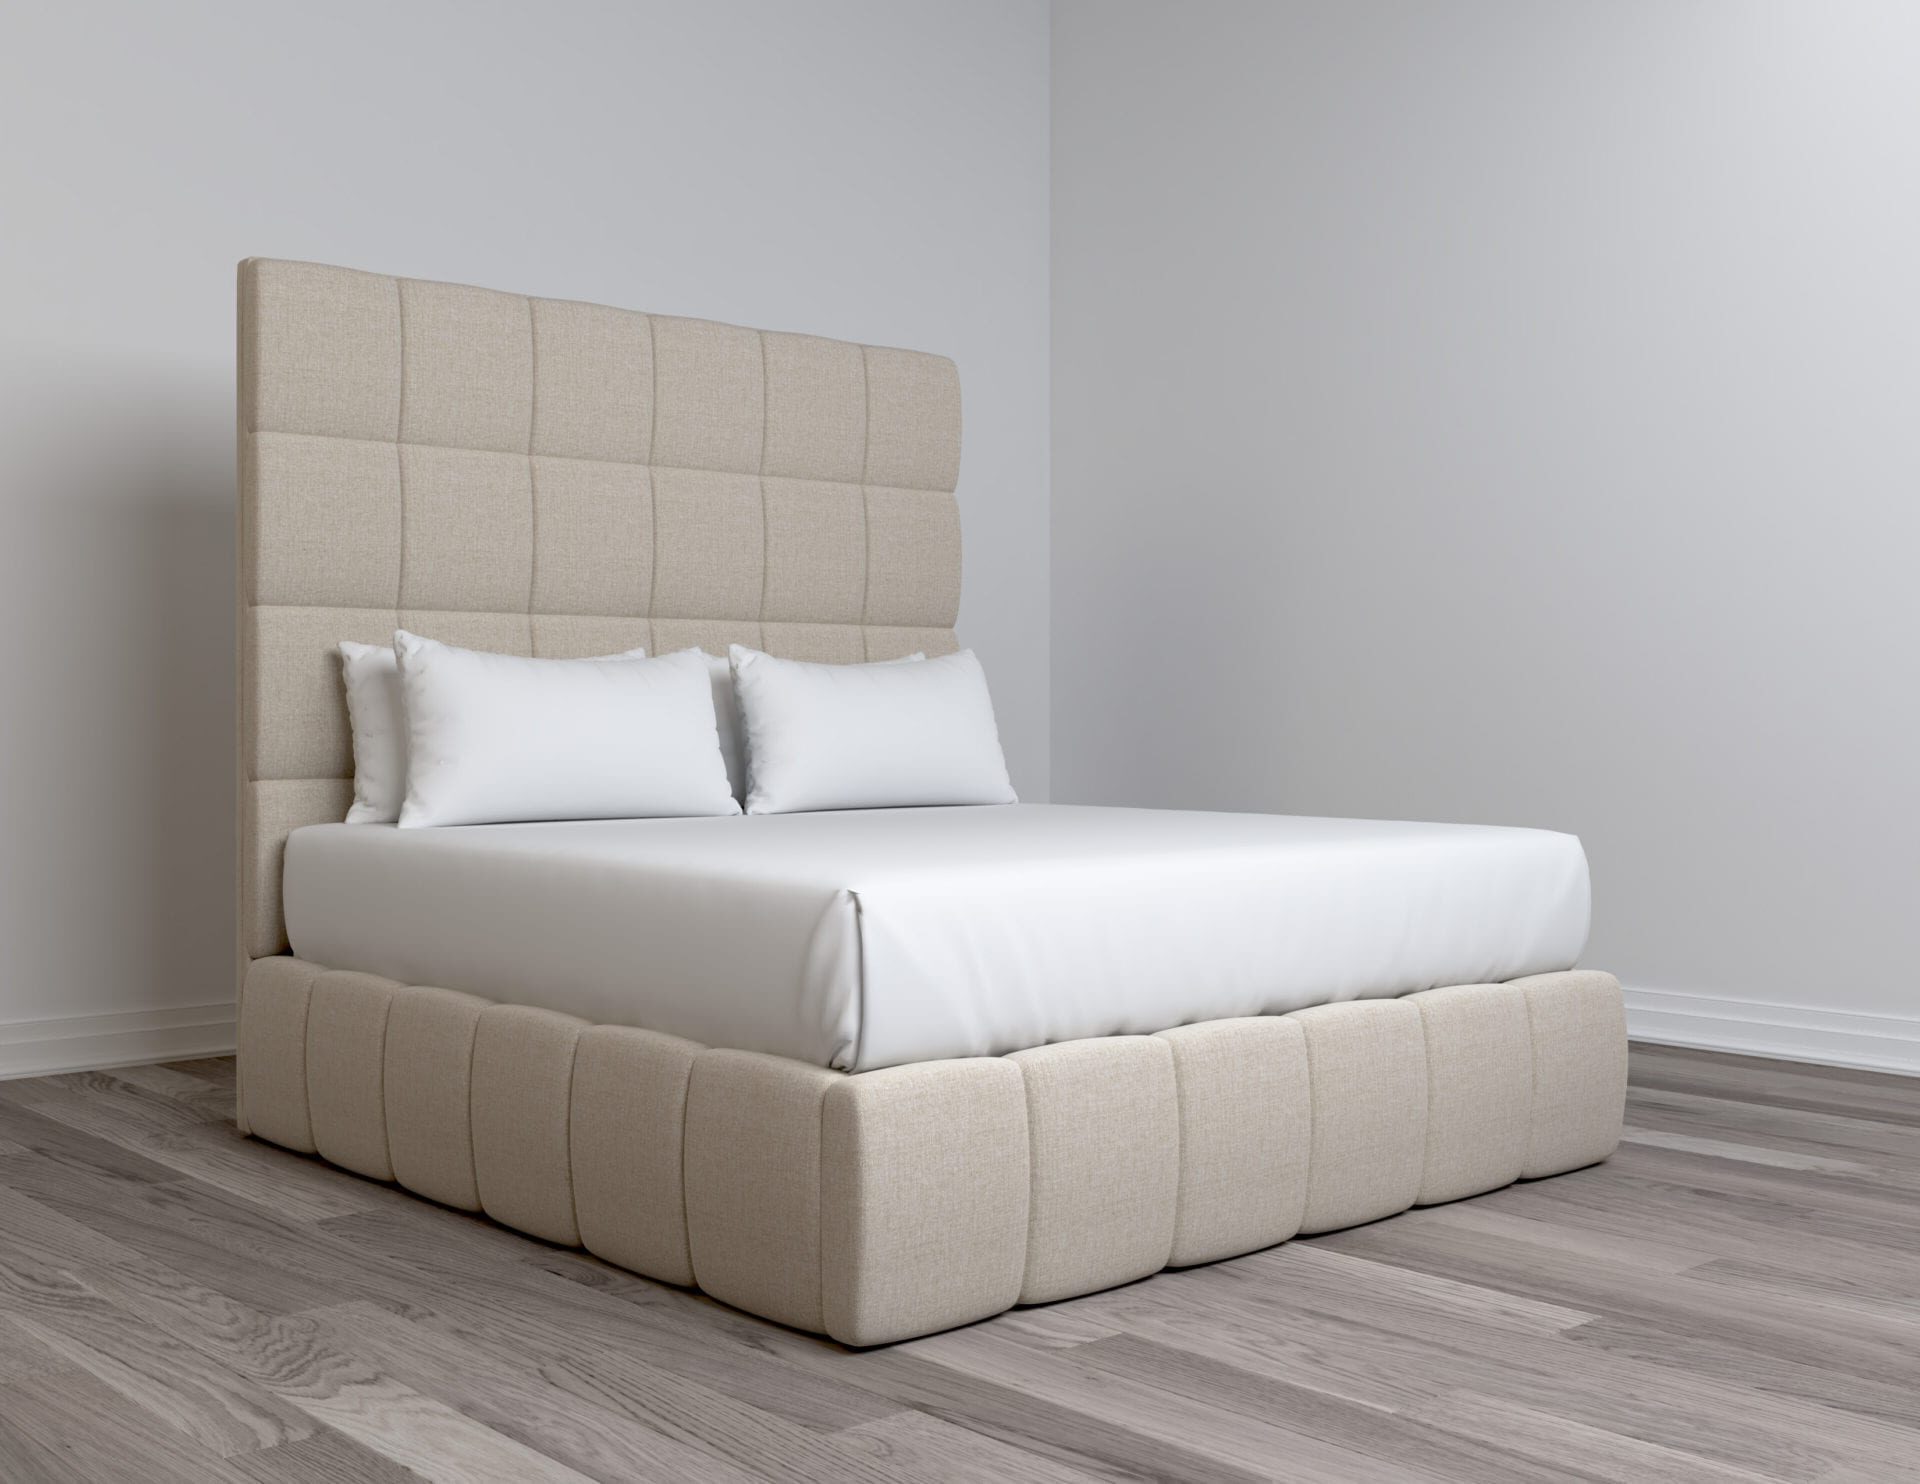 Custom Upholstered Bed - Custom Wall Panels and Wall Panel Headboard | Blend Home Furnishings